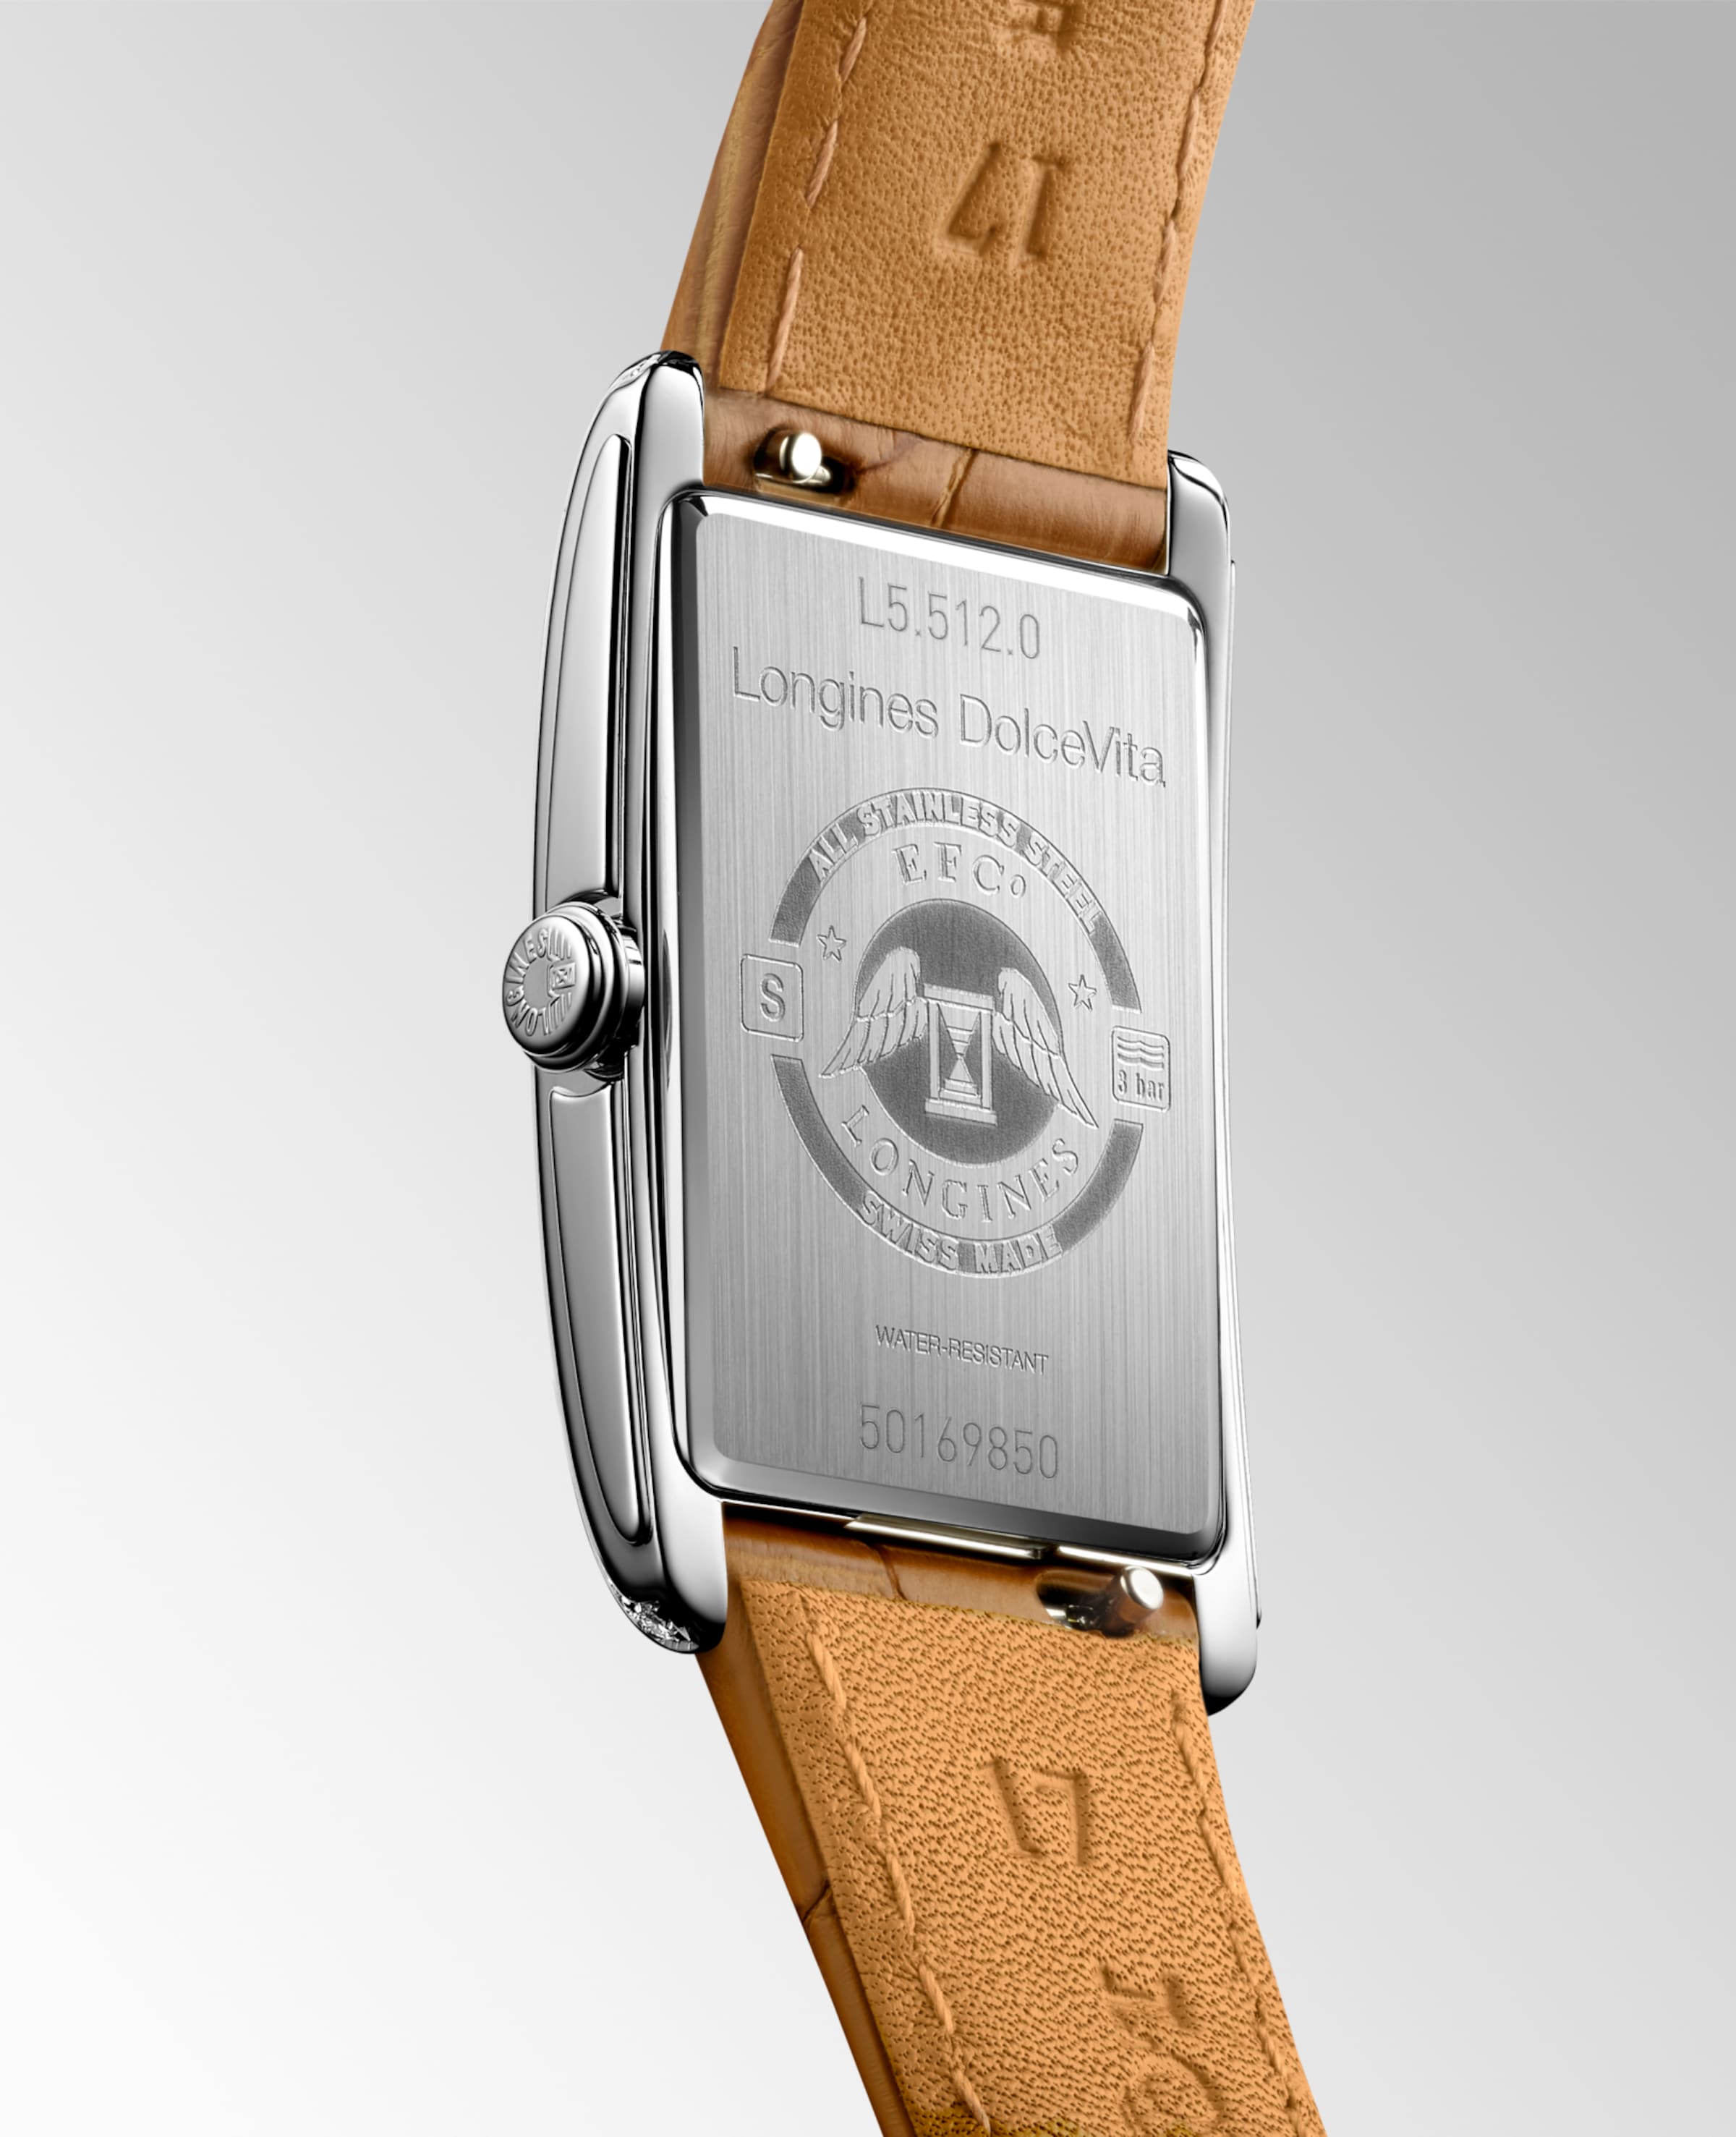 Longines DOLCEVITA Quartz Stainless steel Watch - L5.512.0.71.4